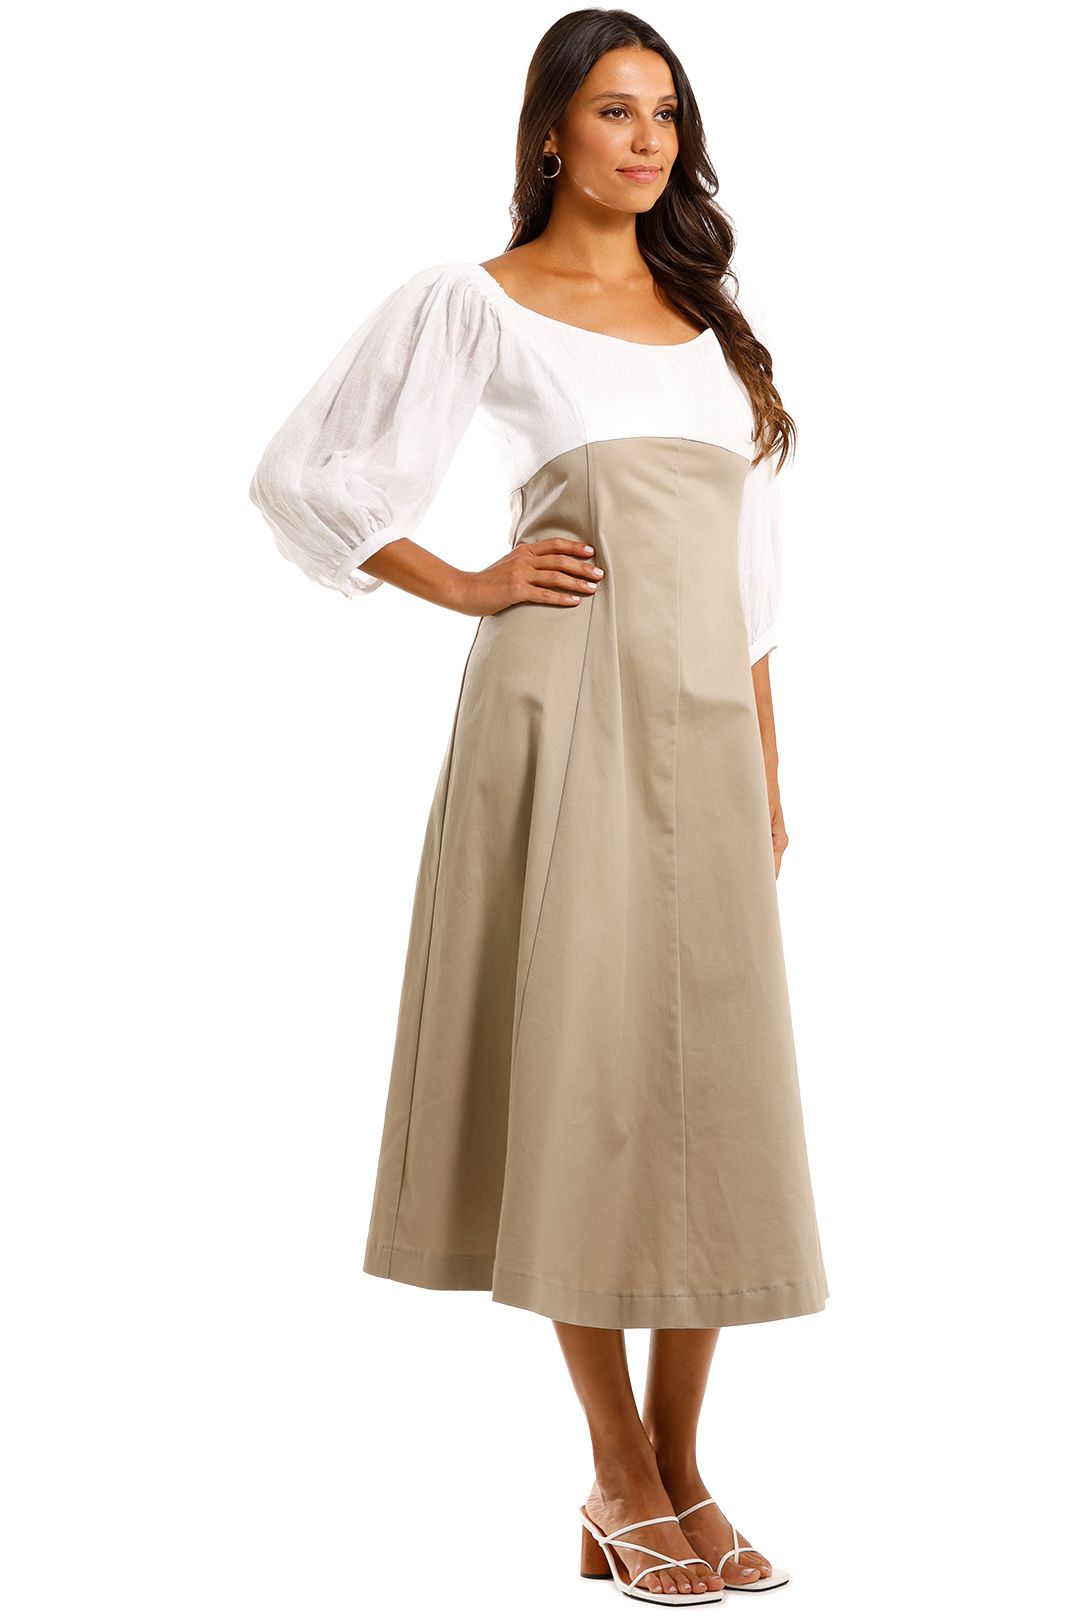 Apartment Clothing Cotton Drill Dress White Sage Cotton Summer Dress